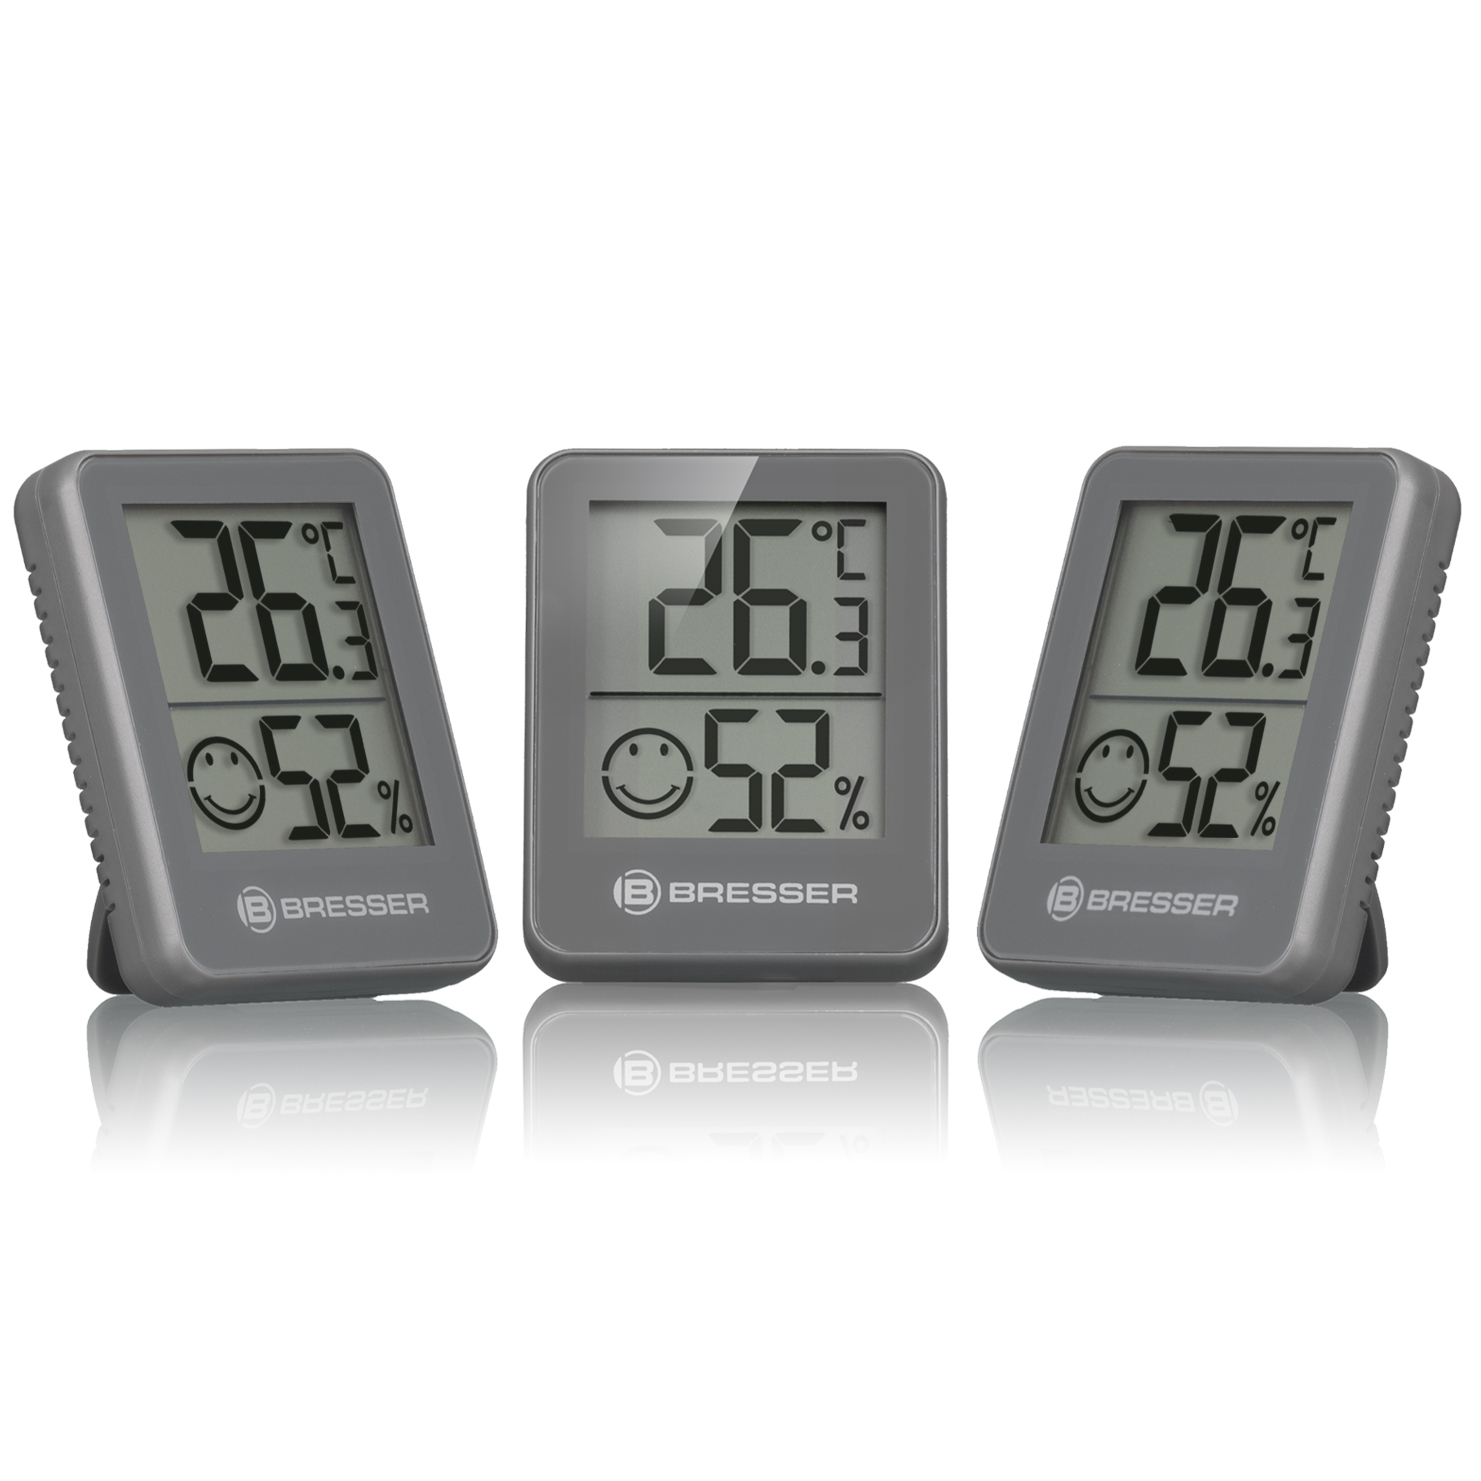 Temeo BRESSER Thermo-/Hygrometer Indikator Wetterstation 6er-Set Hygro